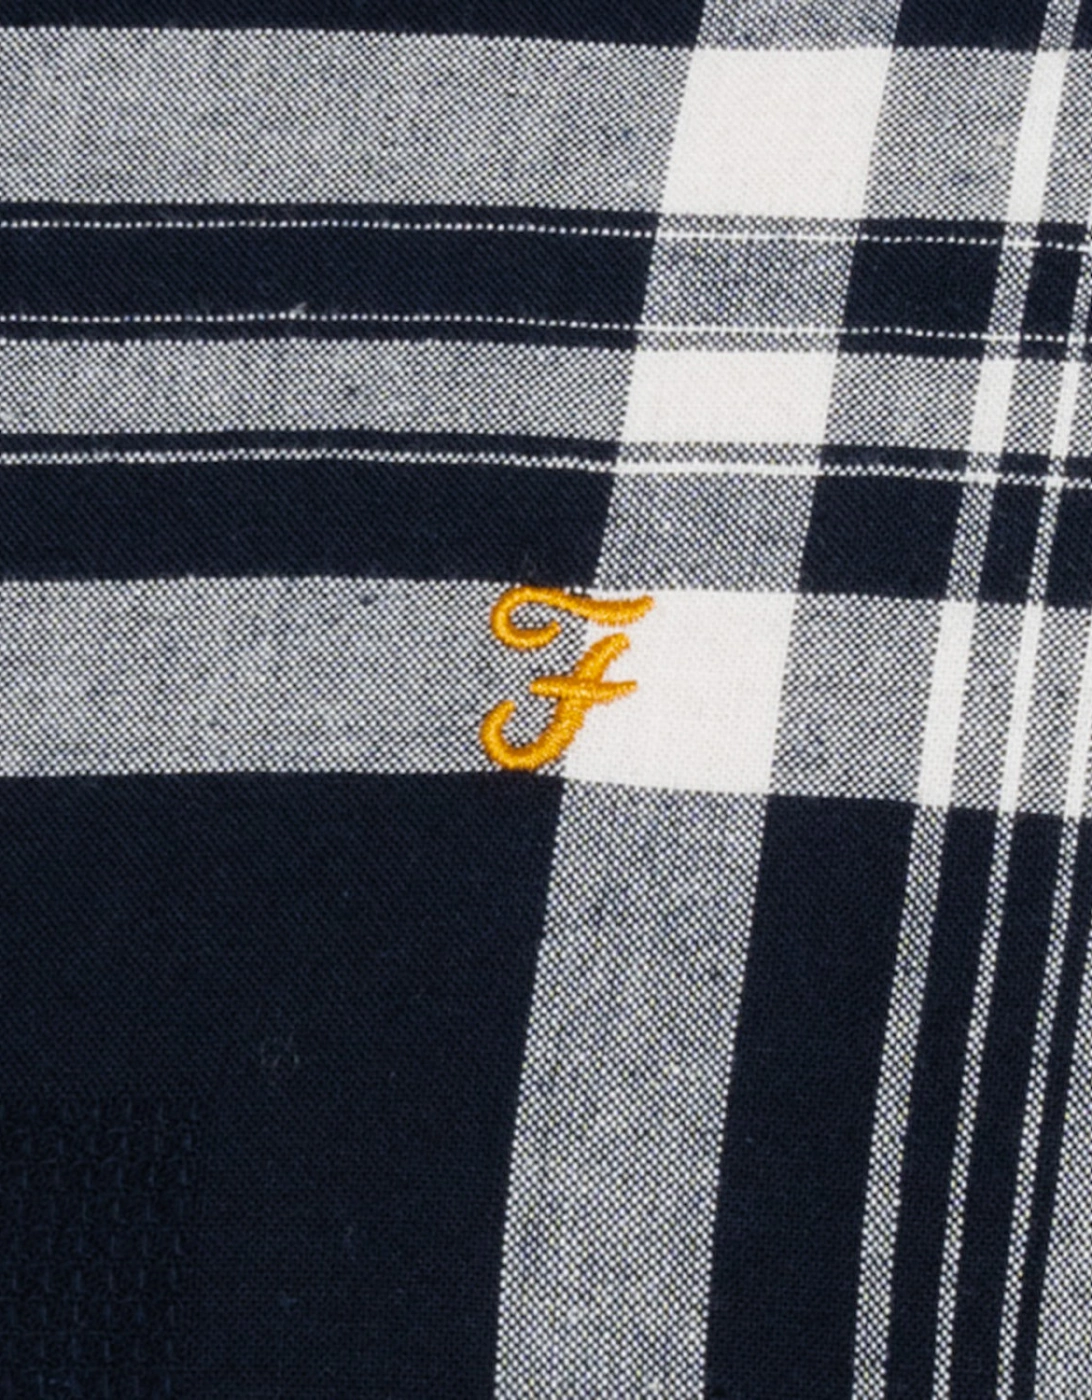 Mens Kele Short Sleeve Check Shirt (Navy)